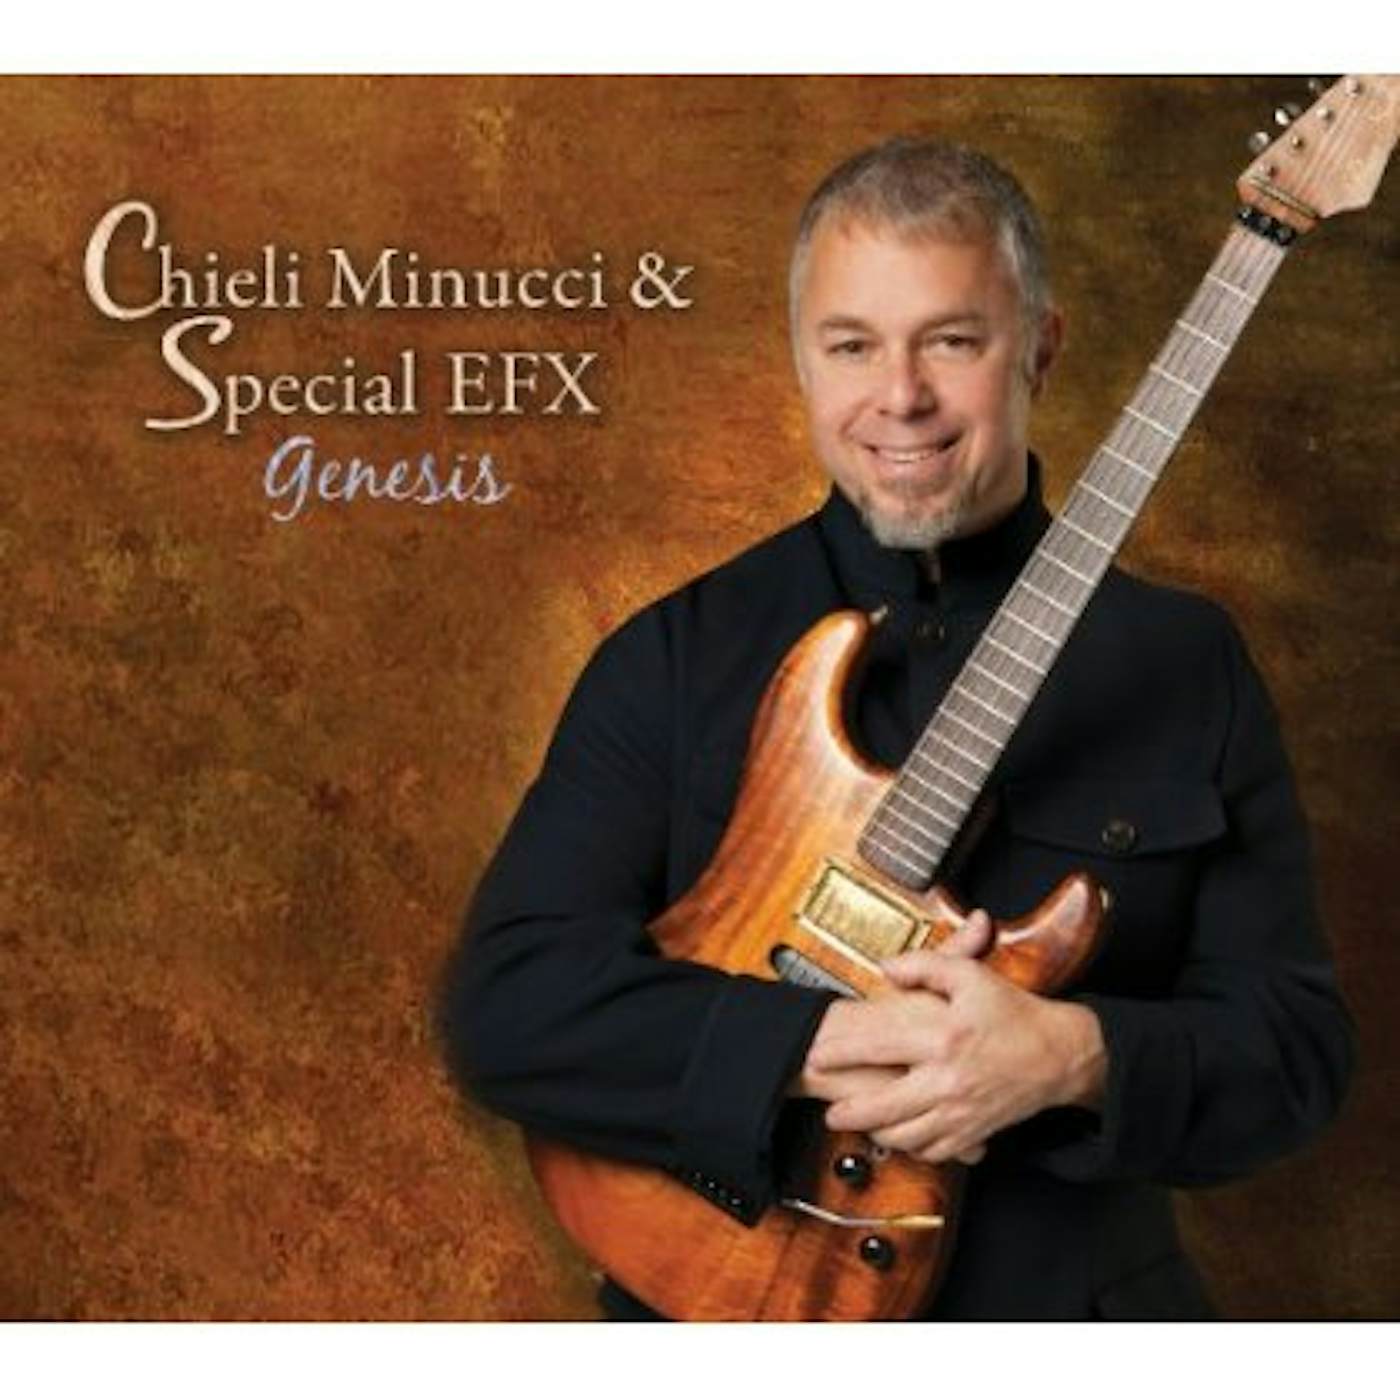 Chieli Minucci & Special EFX GENESIS CD